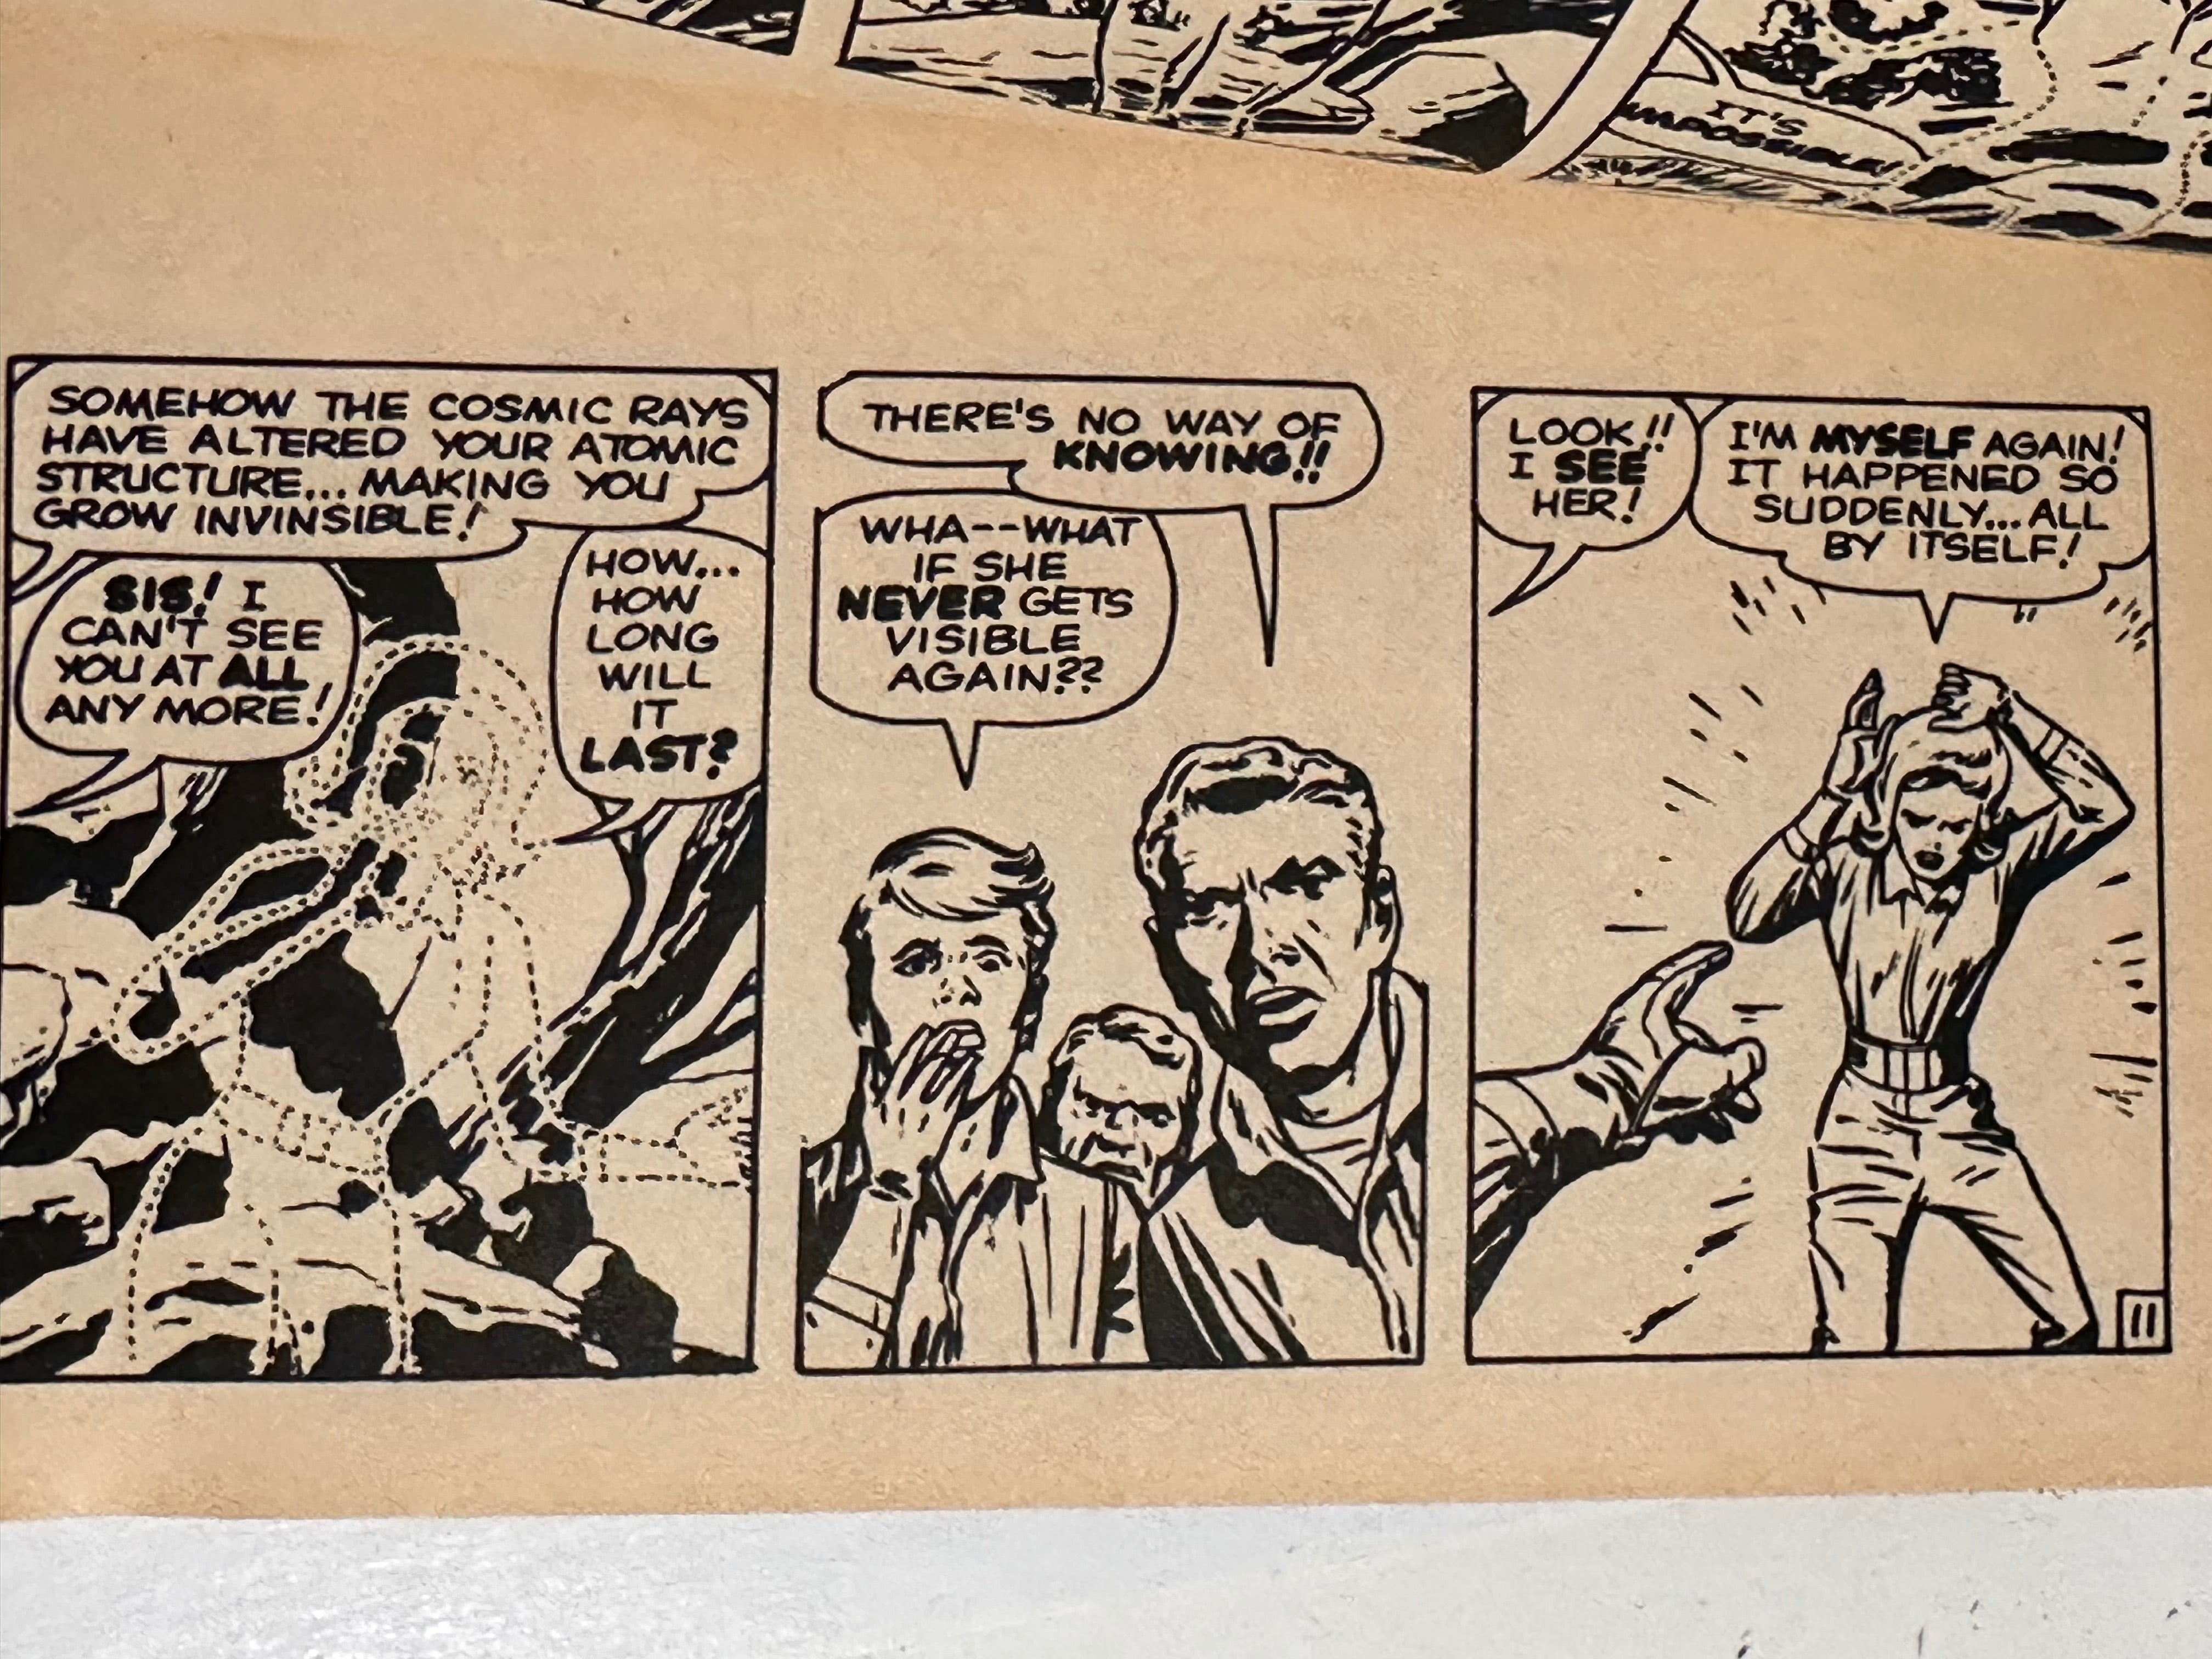 Fantastic Four rare vintage comic pocket book 1967